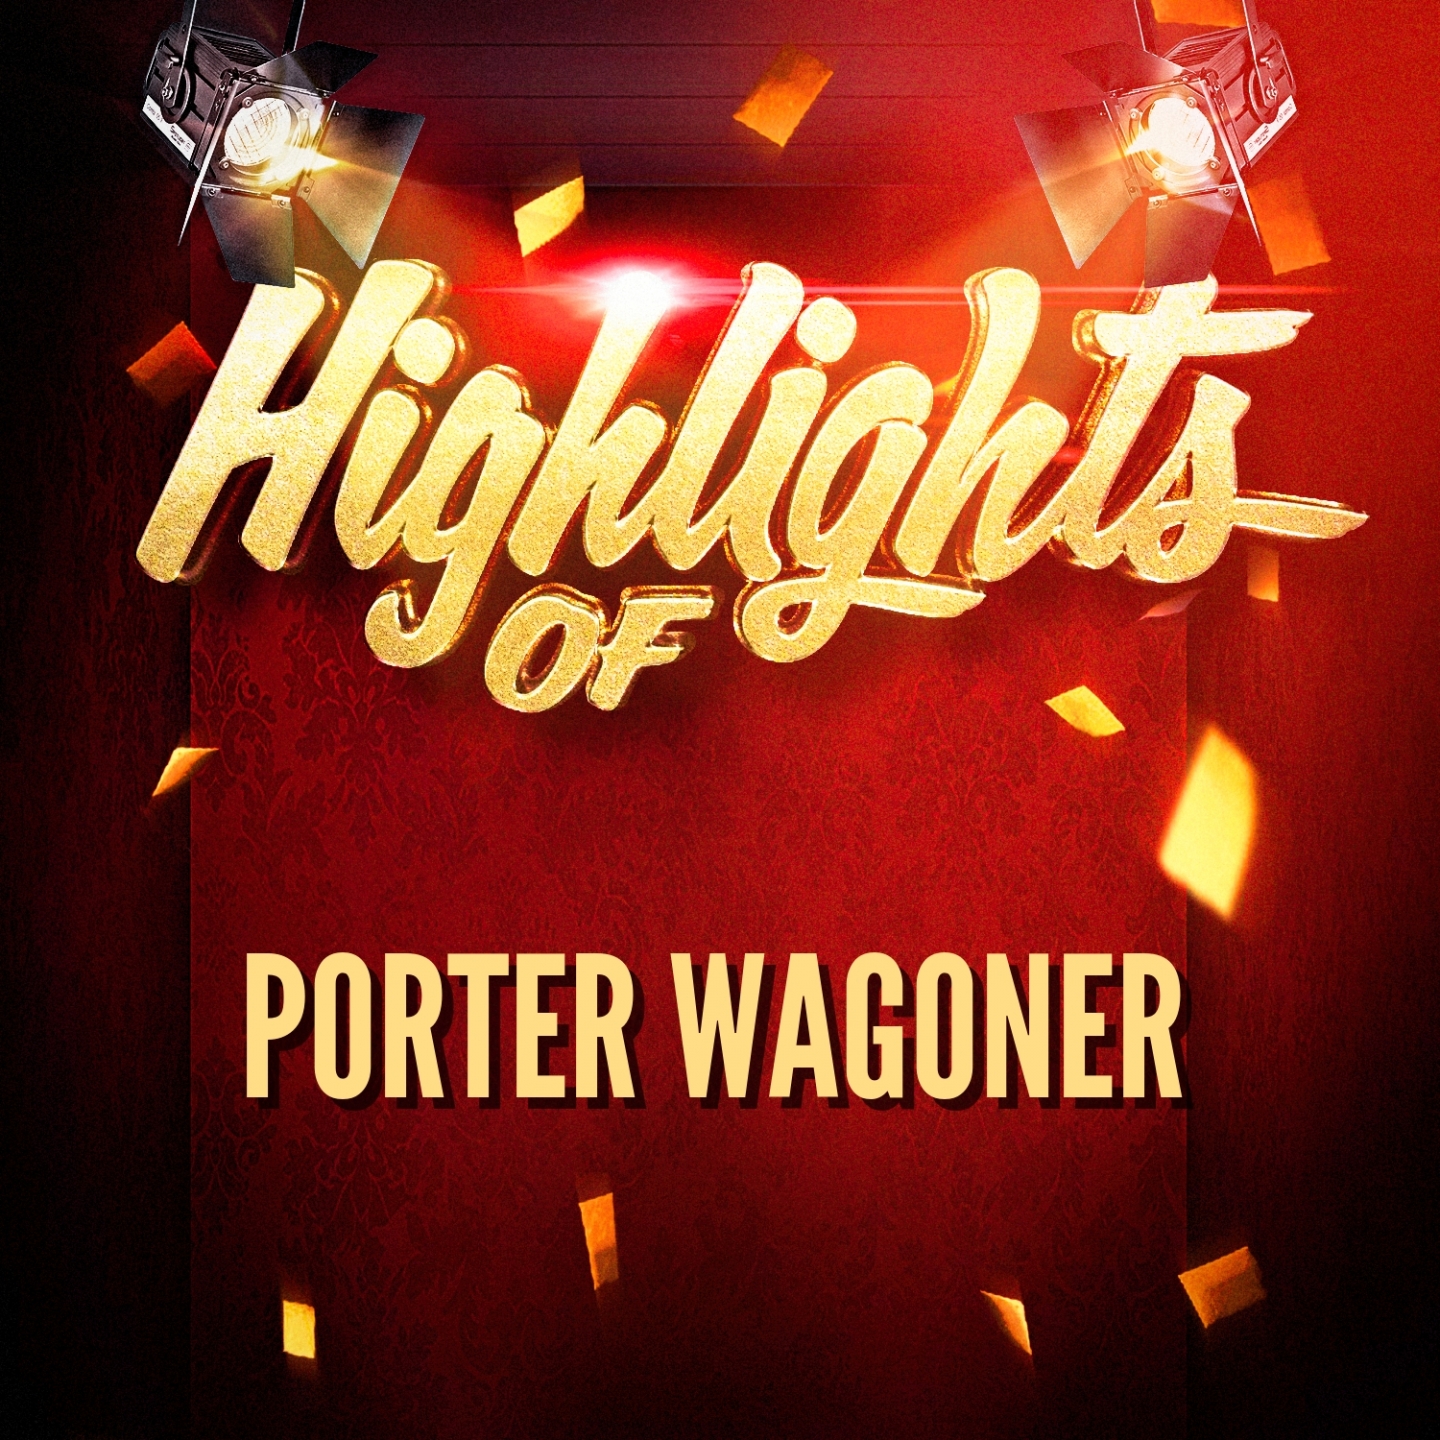 Highlights of Porter Wagoner